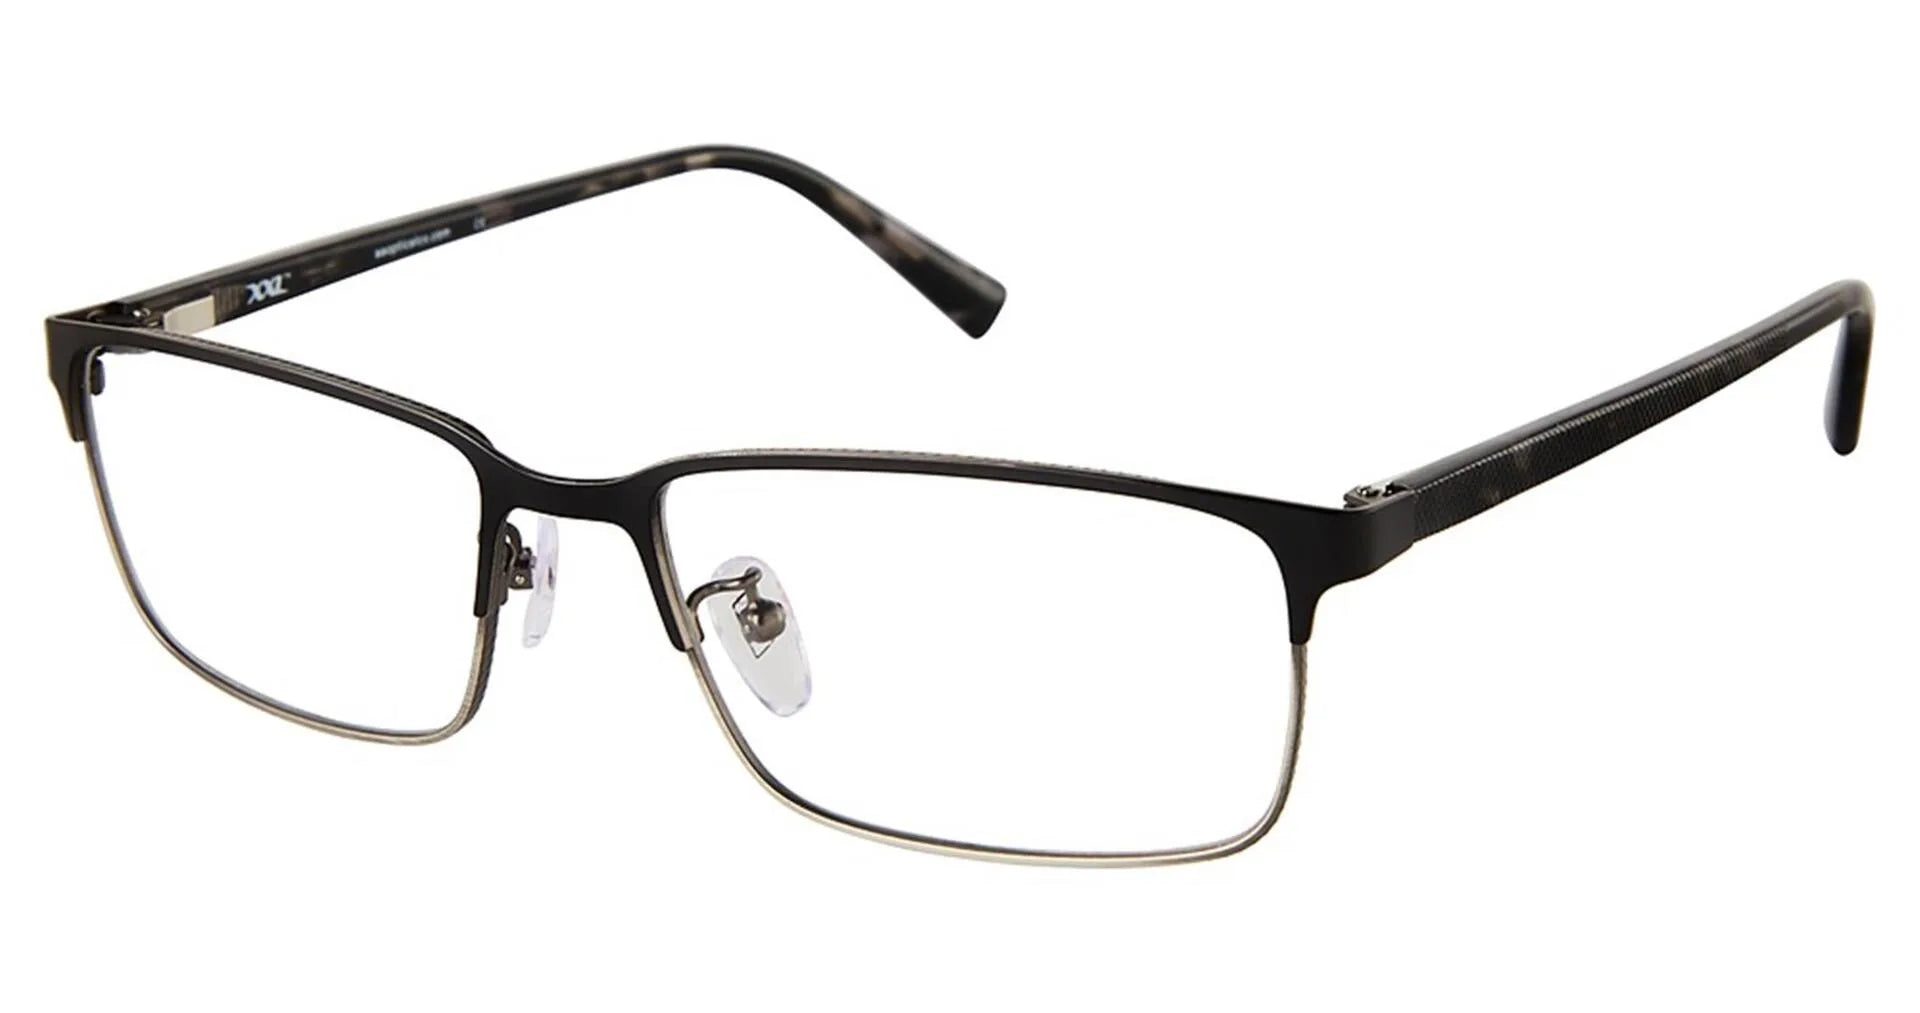 XXL Eyewear Major Eyeglasses Black